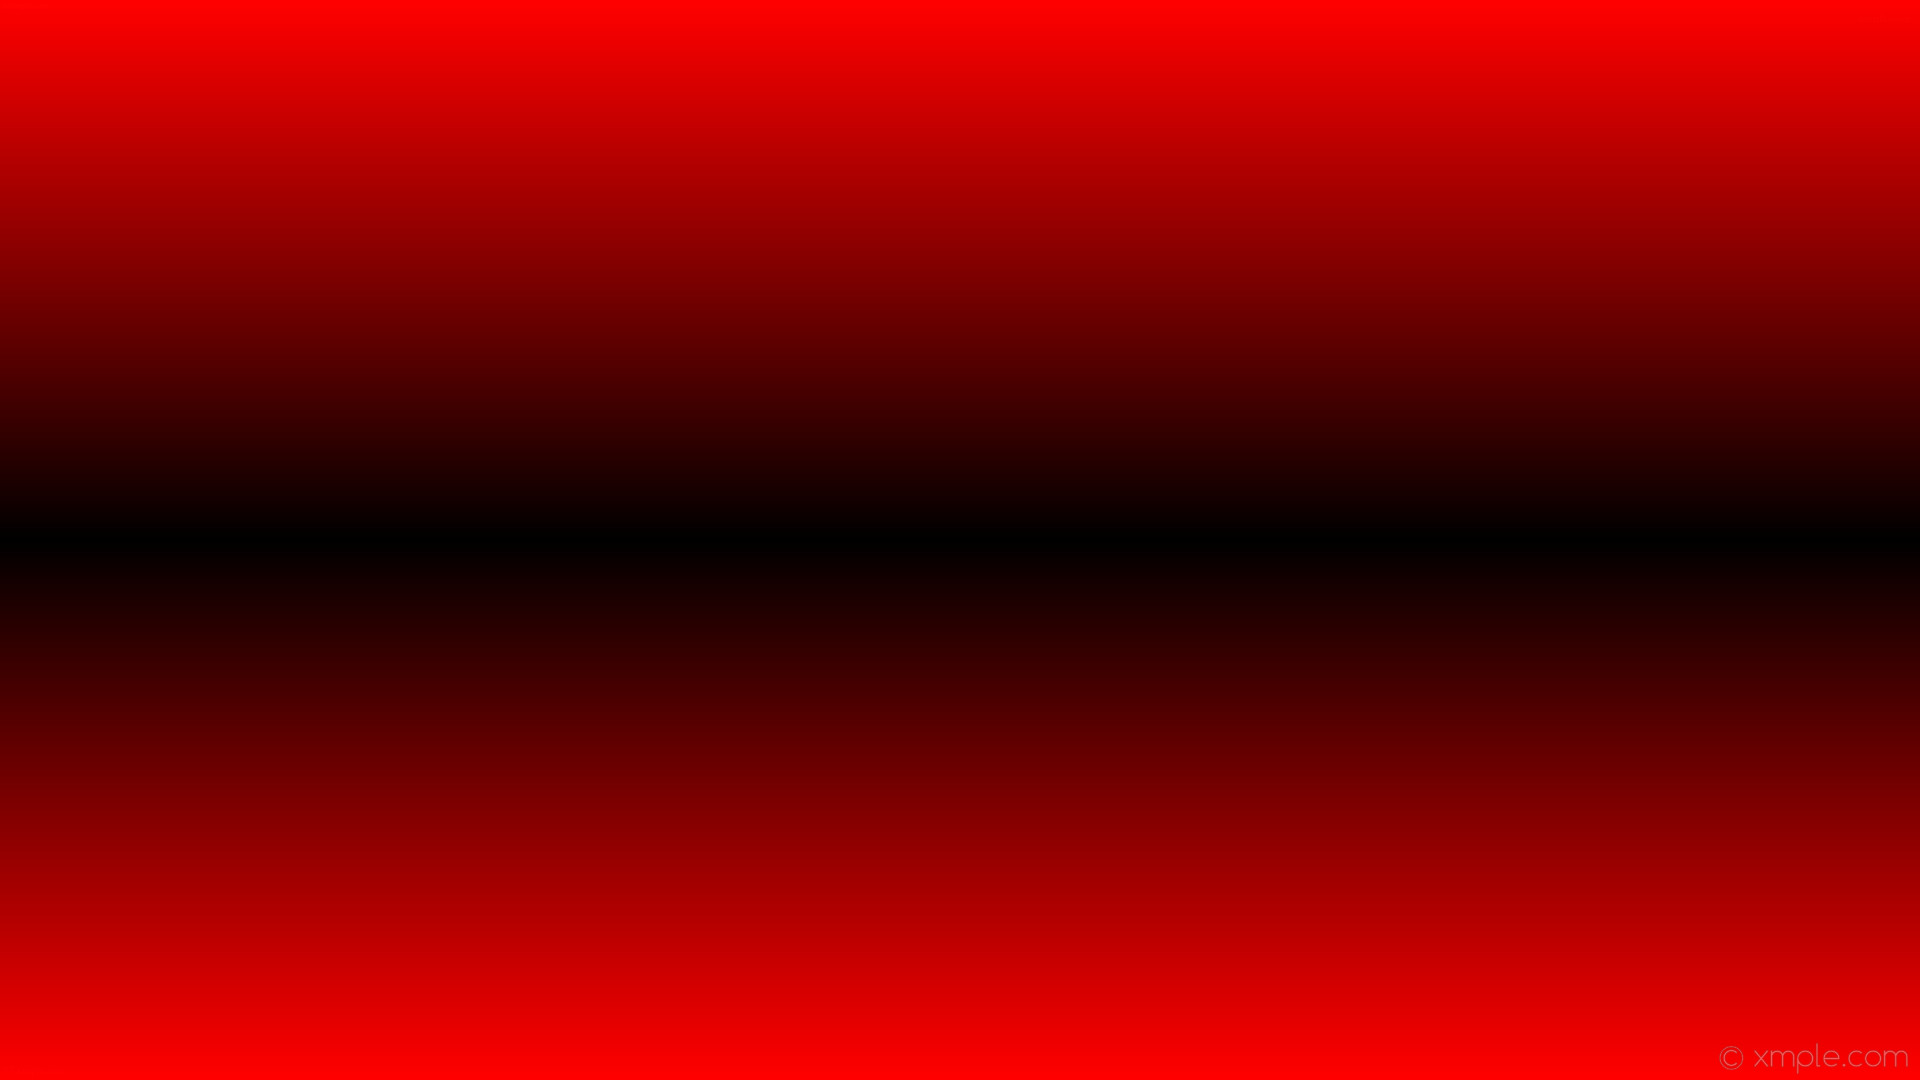 1920x1080 wallpaper linear red black highlight gradient #ff0000 #000000 90Â° 50%